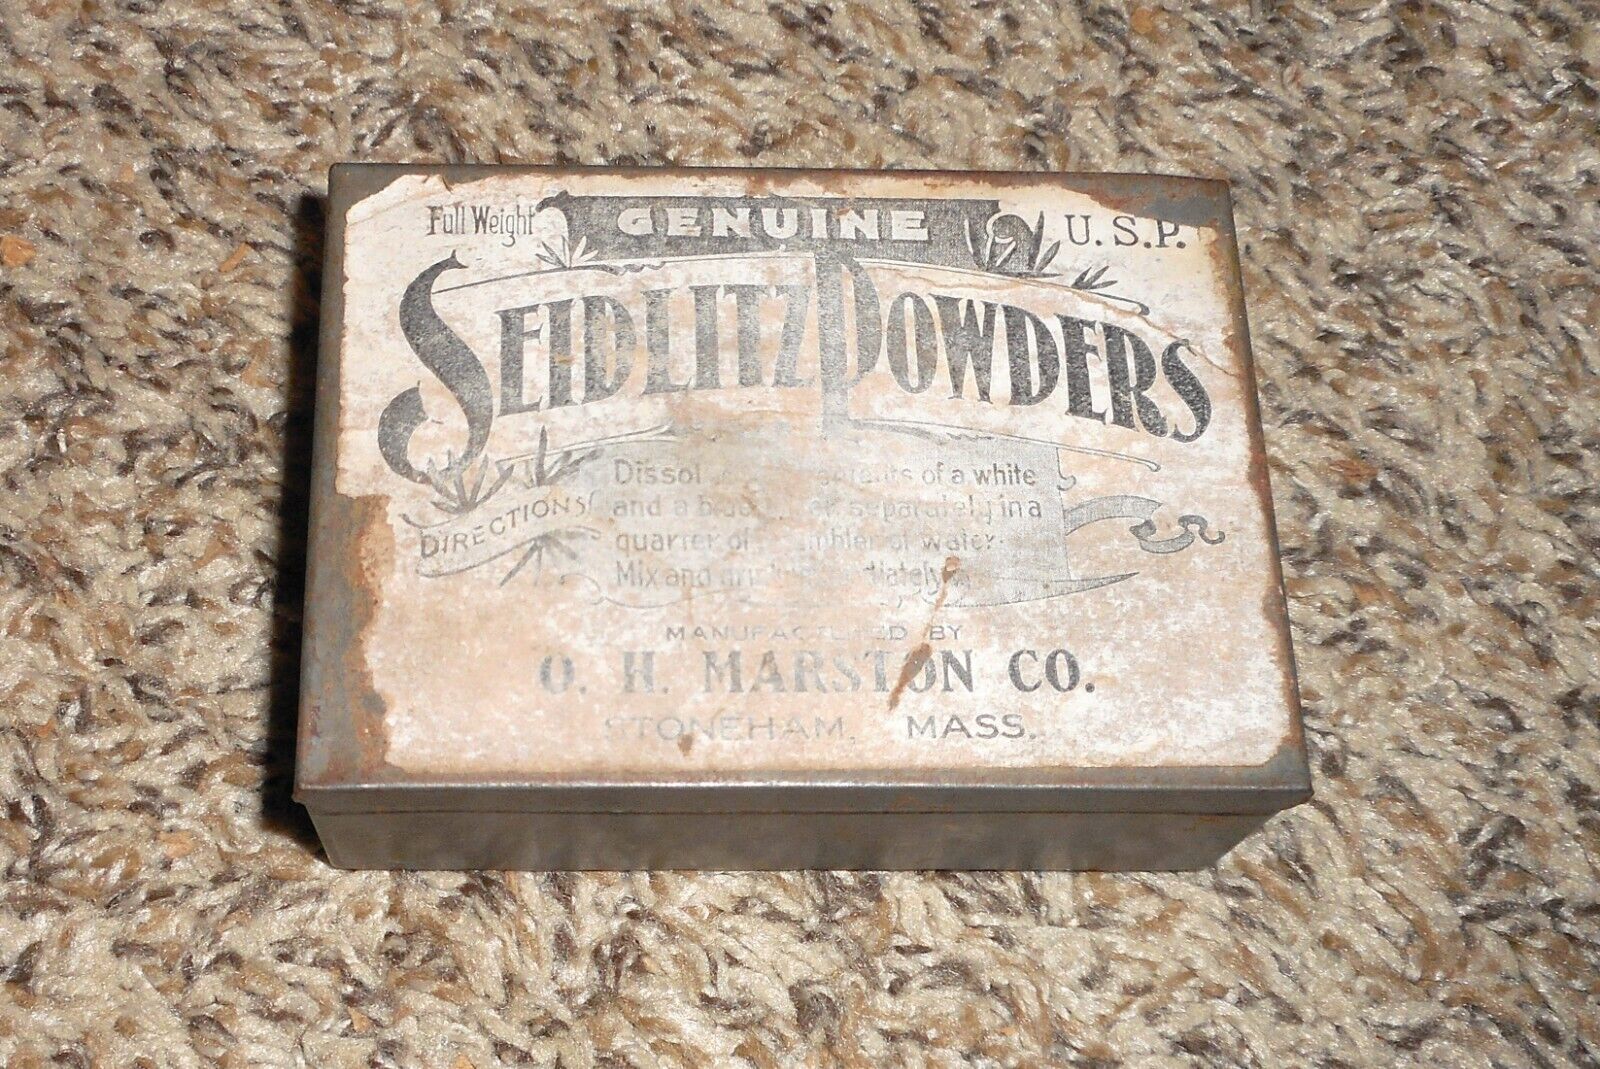 Vintage Seidlitz Powders Oh Marston Stoneham MA Advertising Metal Box Container